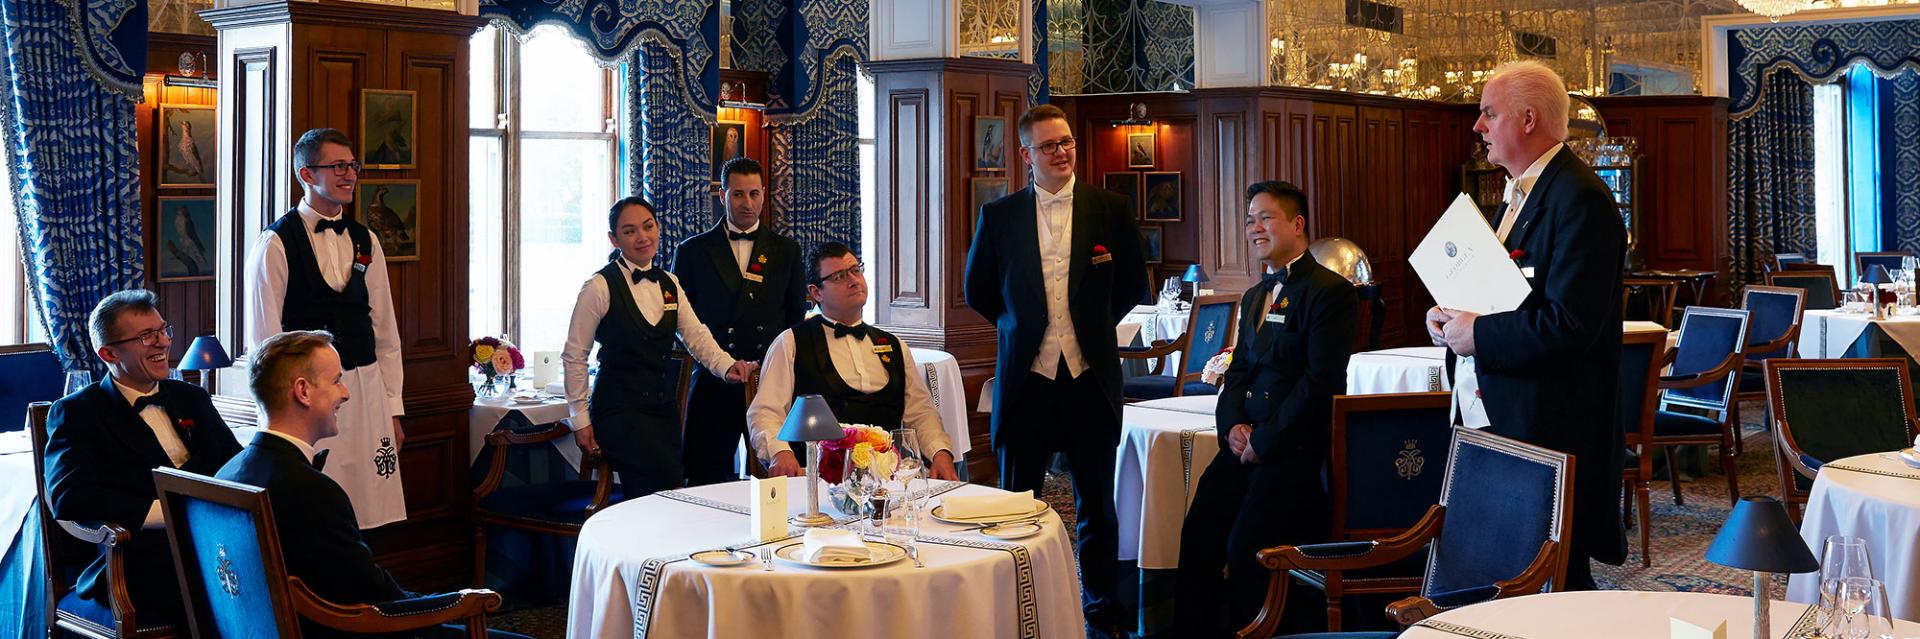 Ashford Castle George V Dining Room Team